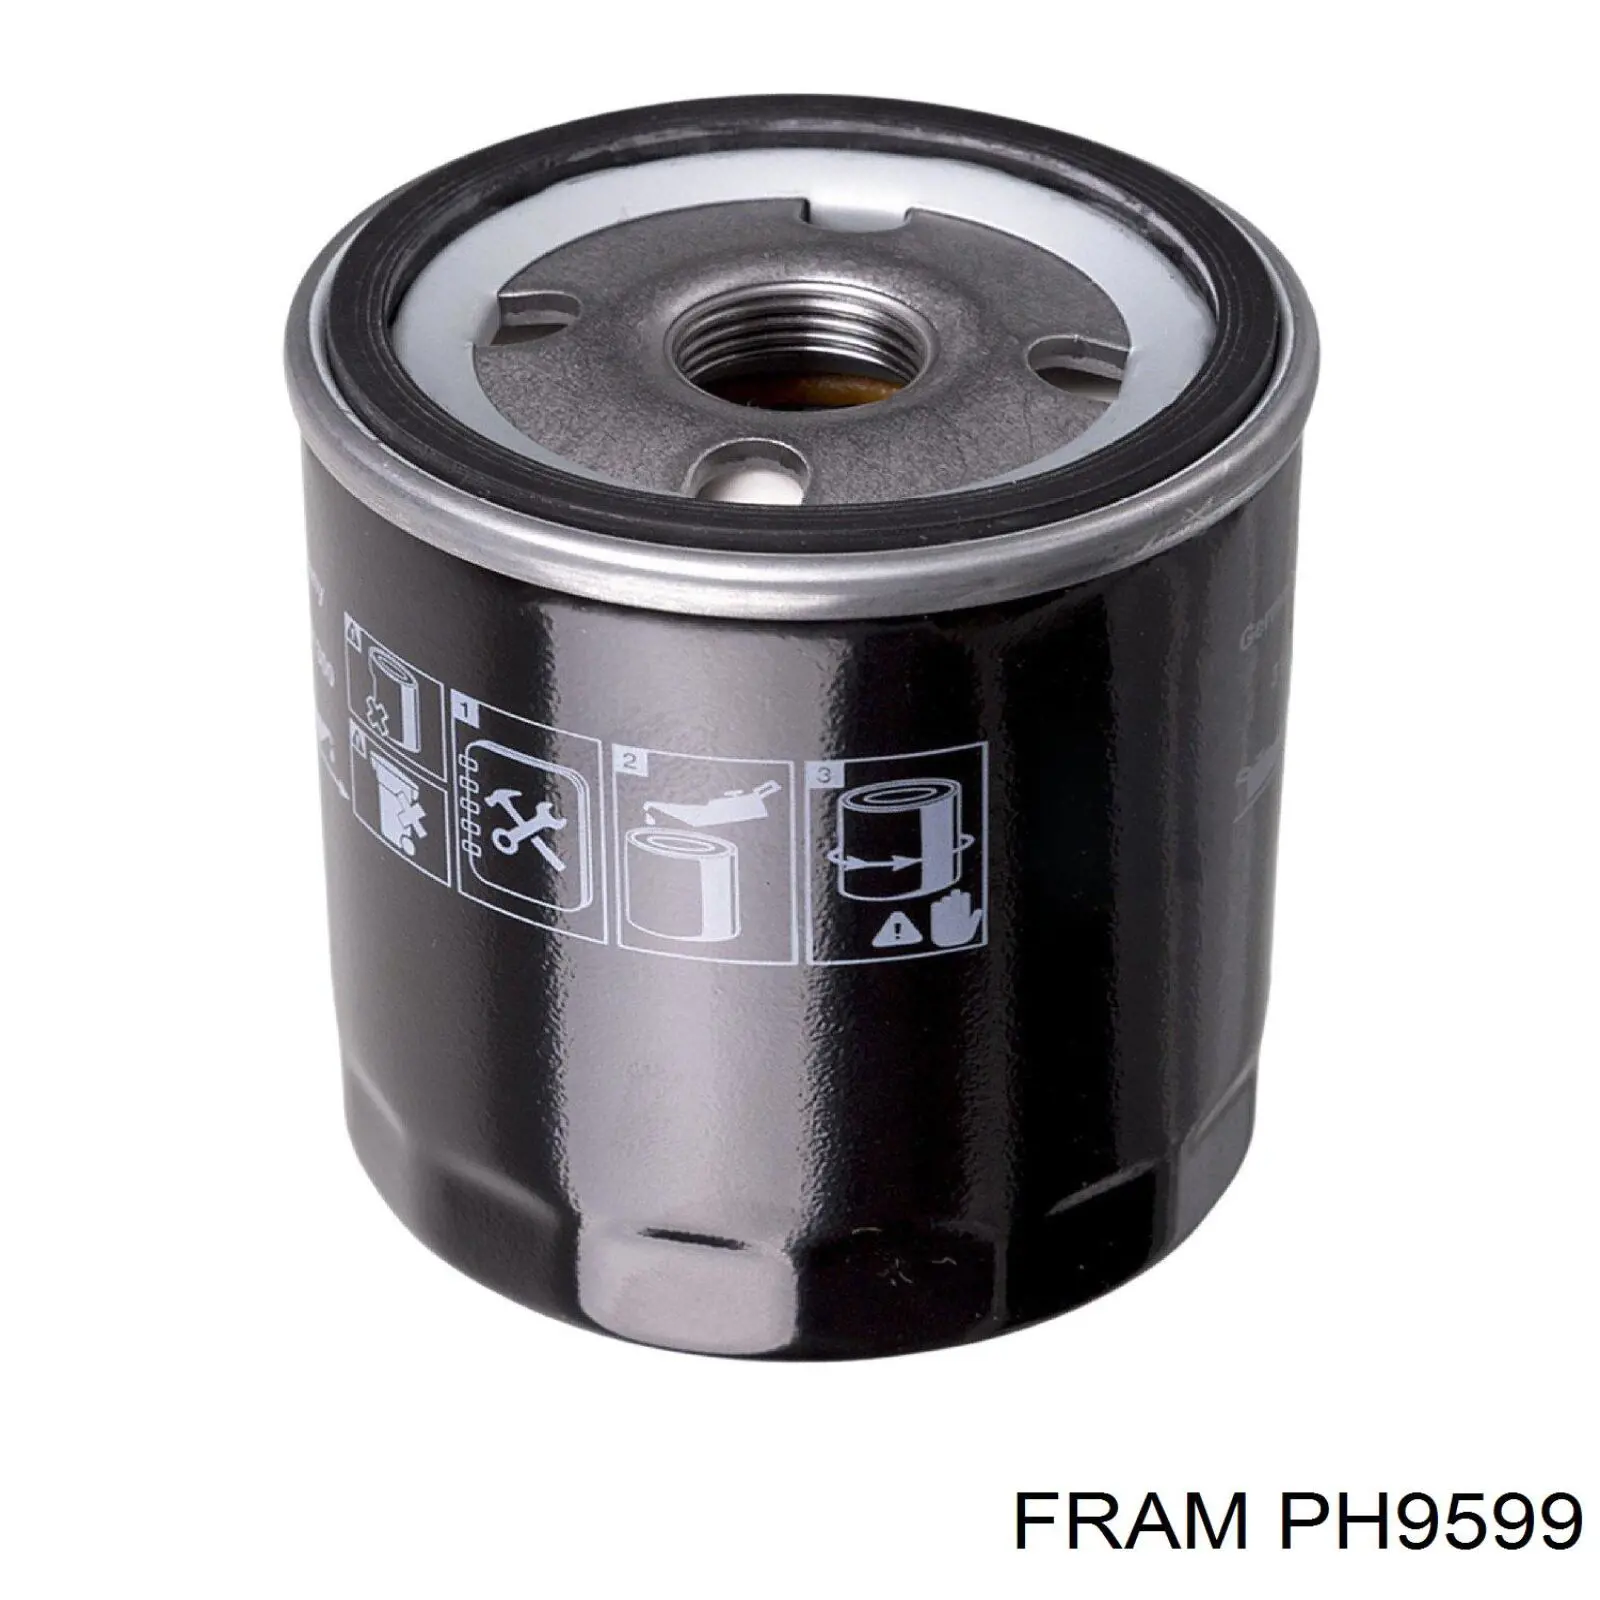 PH9599 Fram filtro de aceite